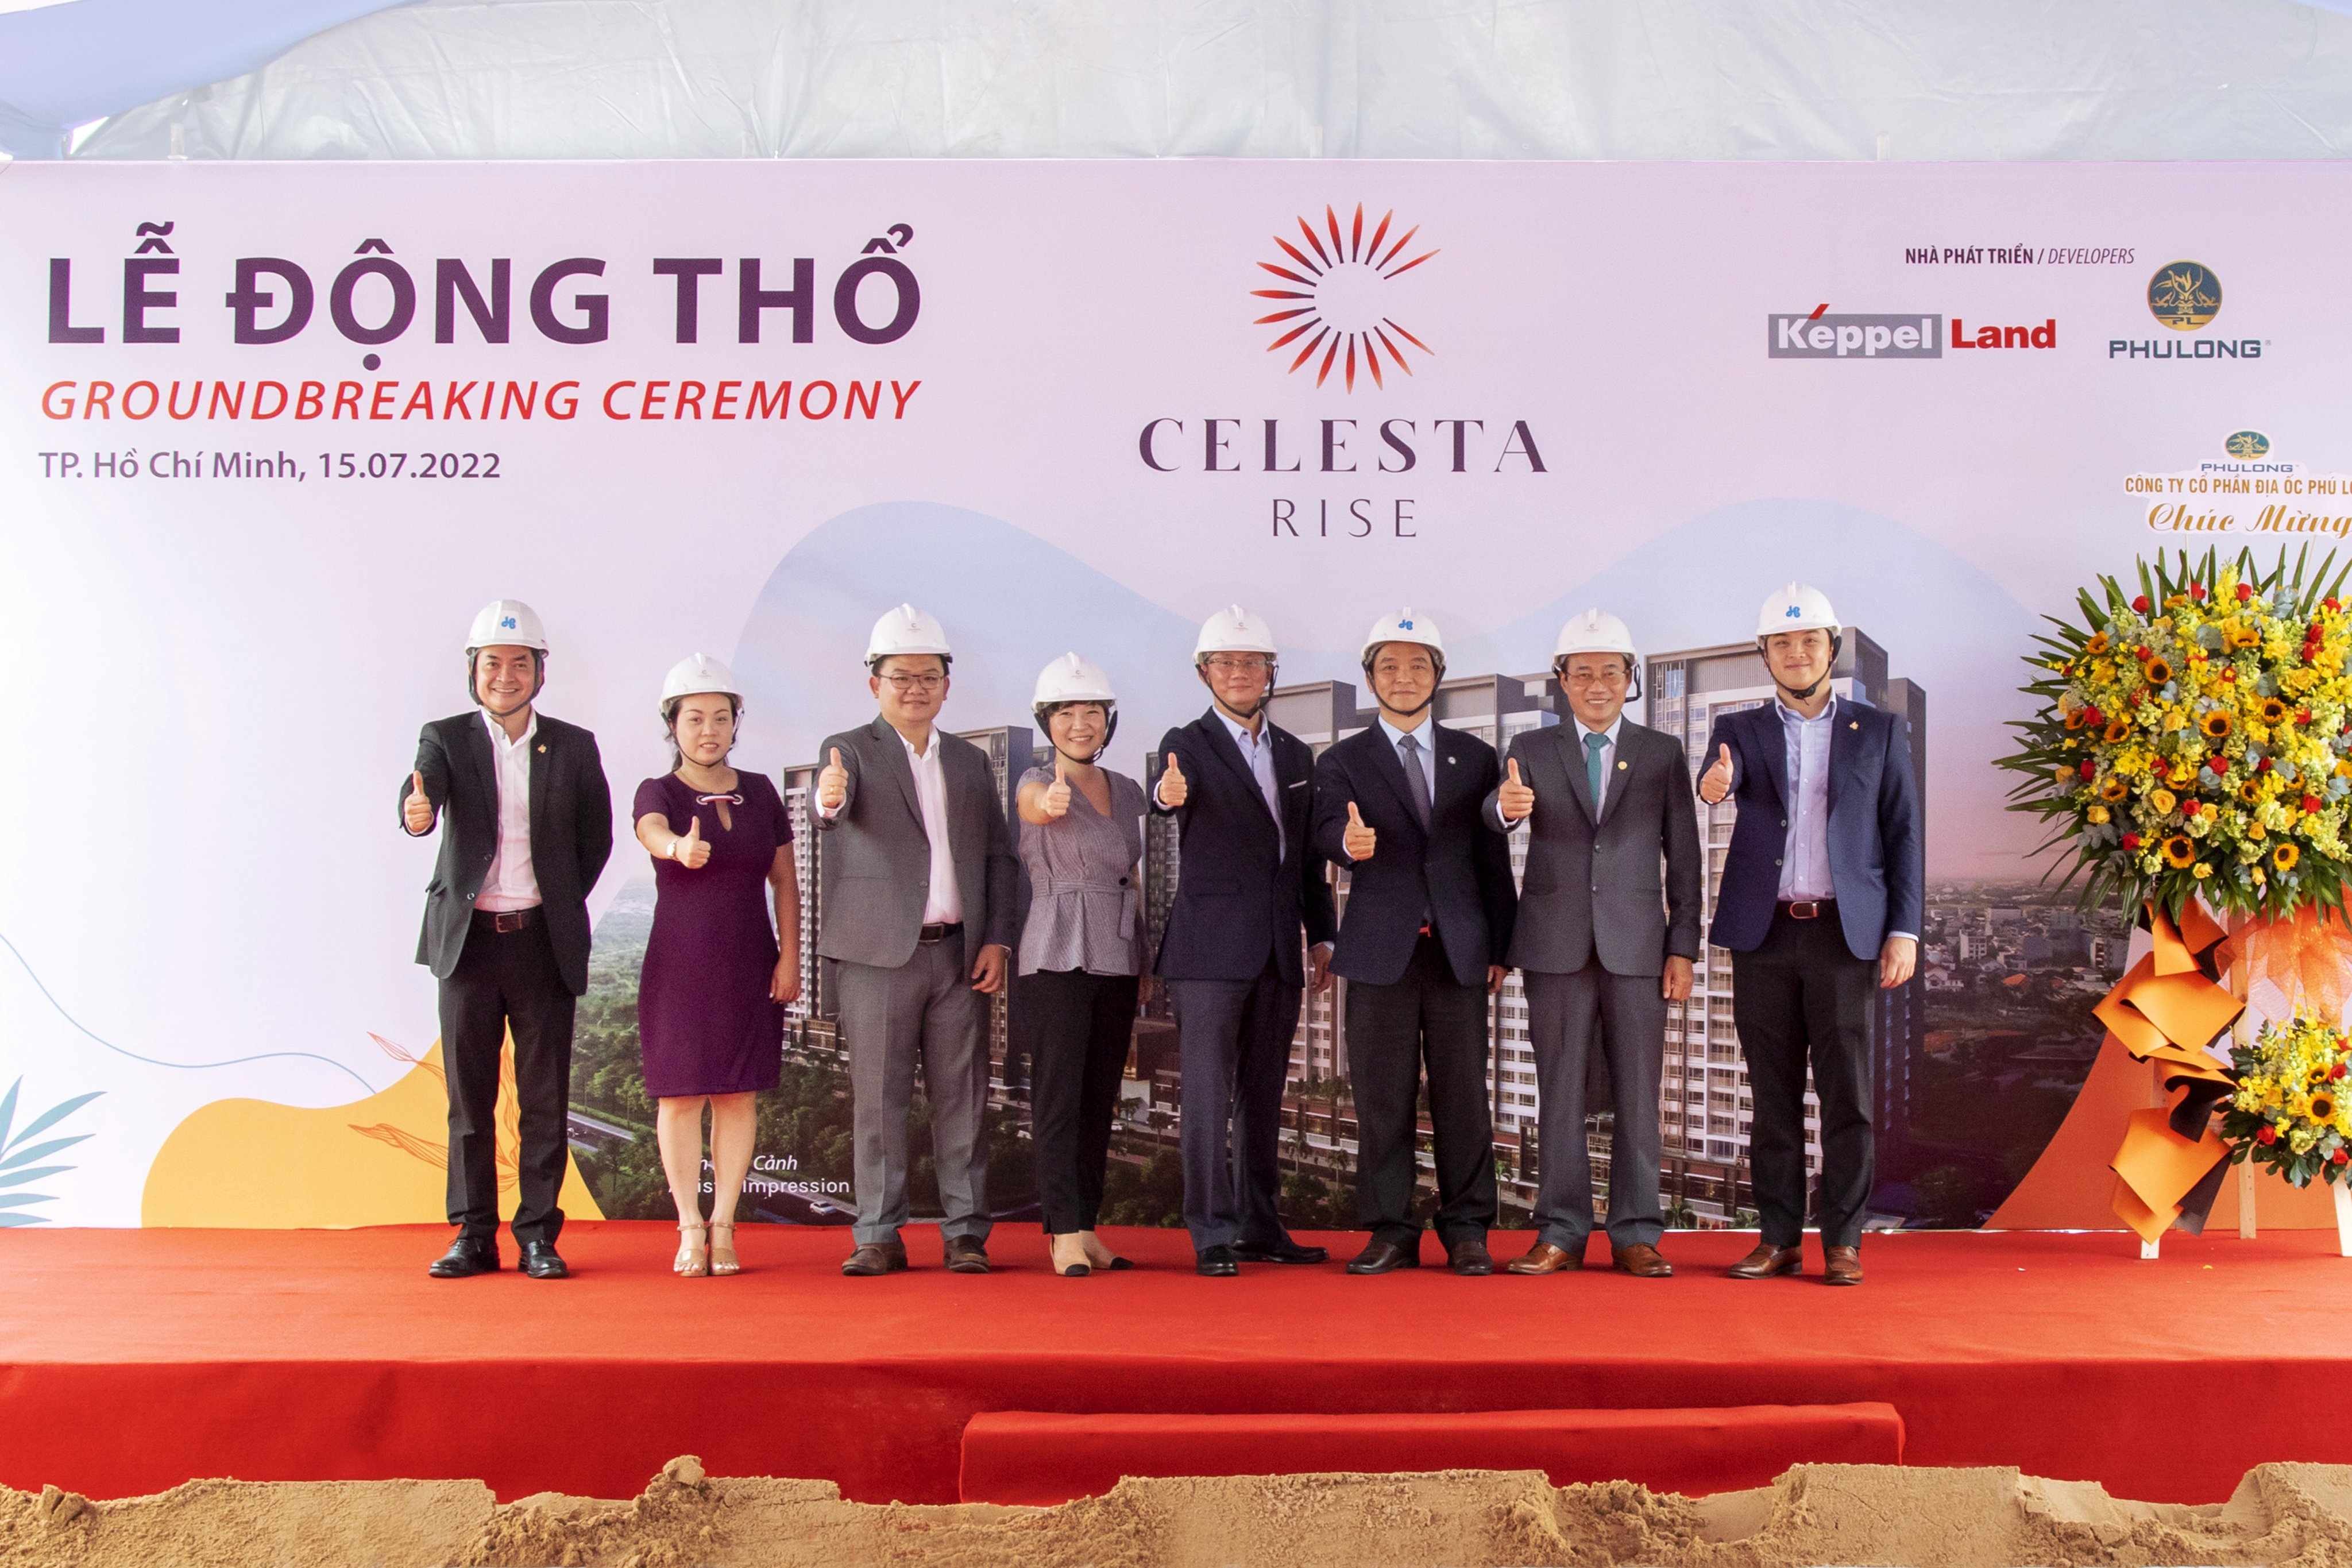 Representatives from Keppel Land, Phu Long, and Hoa Binh celebrated the groundbreaking of Celesta Rise